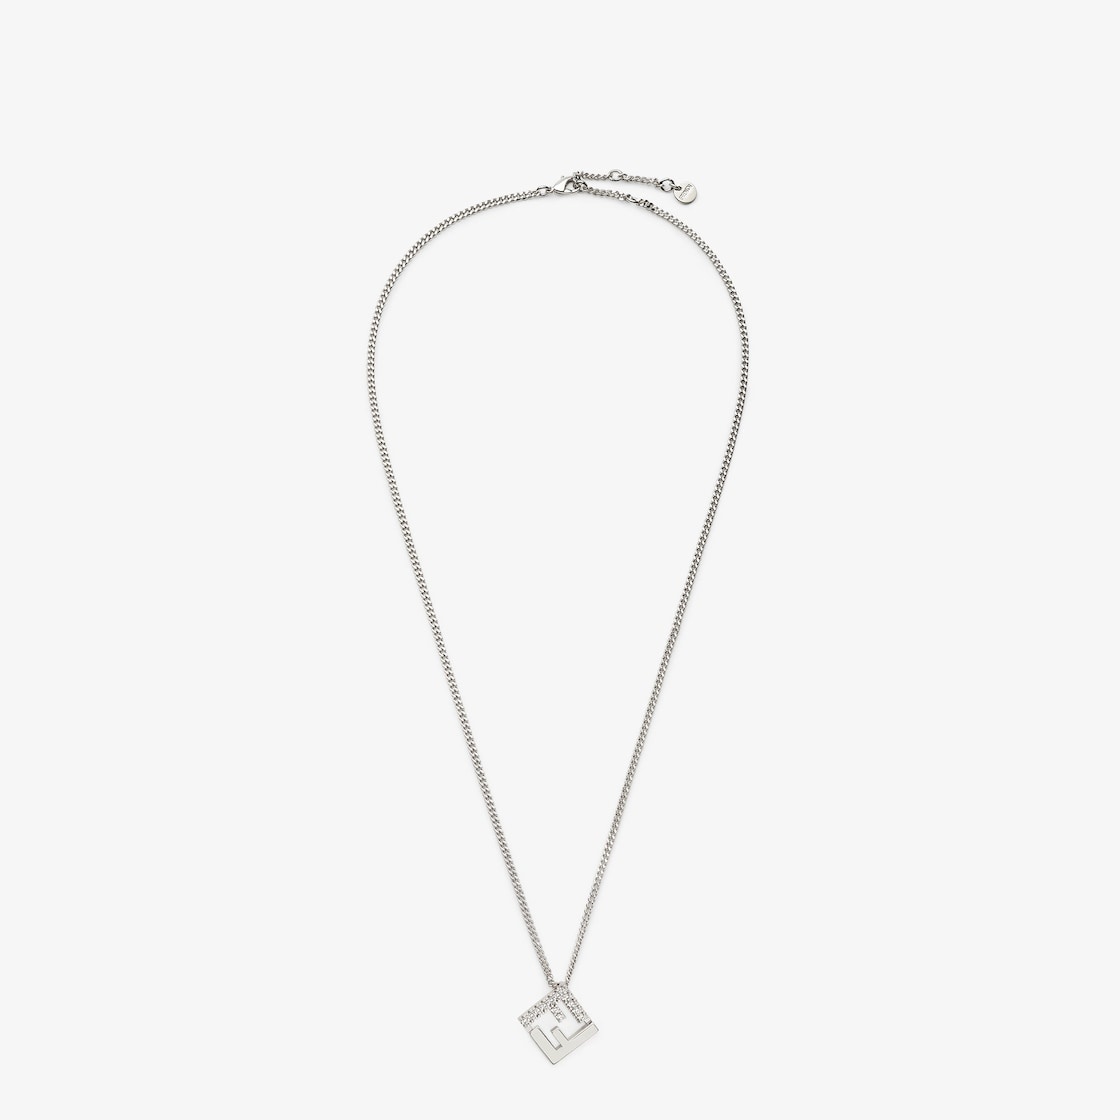 Forever Fendi necklace - 1